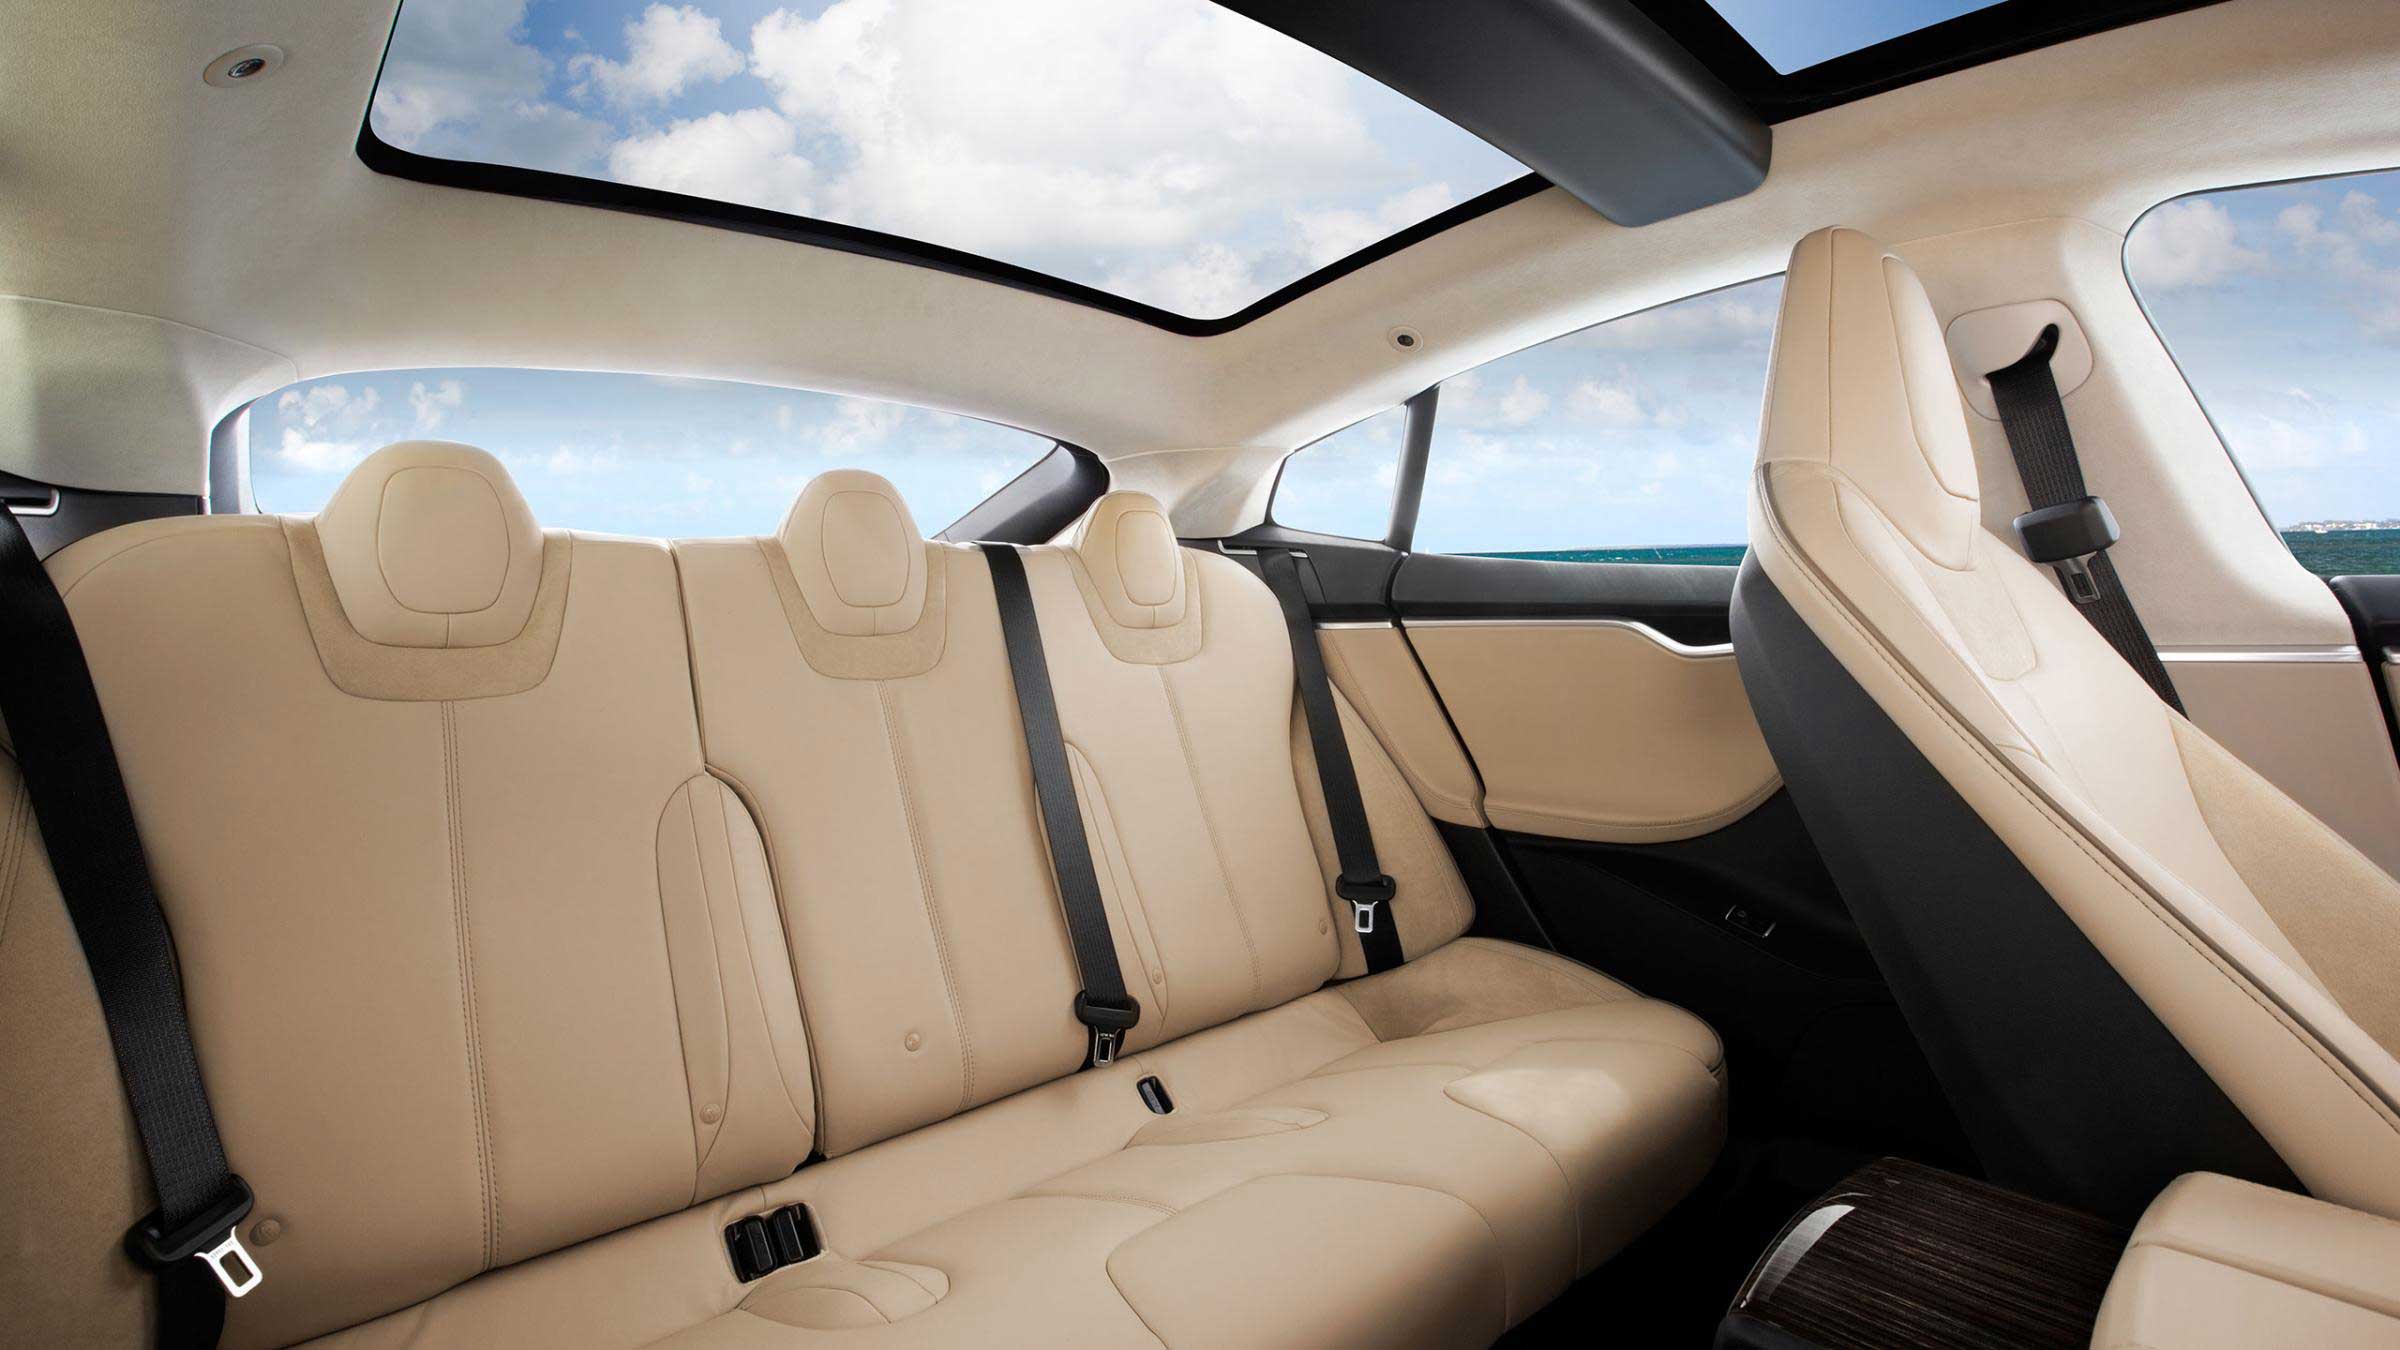 Tesla 2014 Model S Interior Image Gallery Pictures Photos